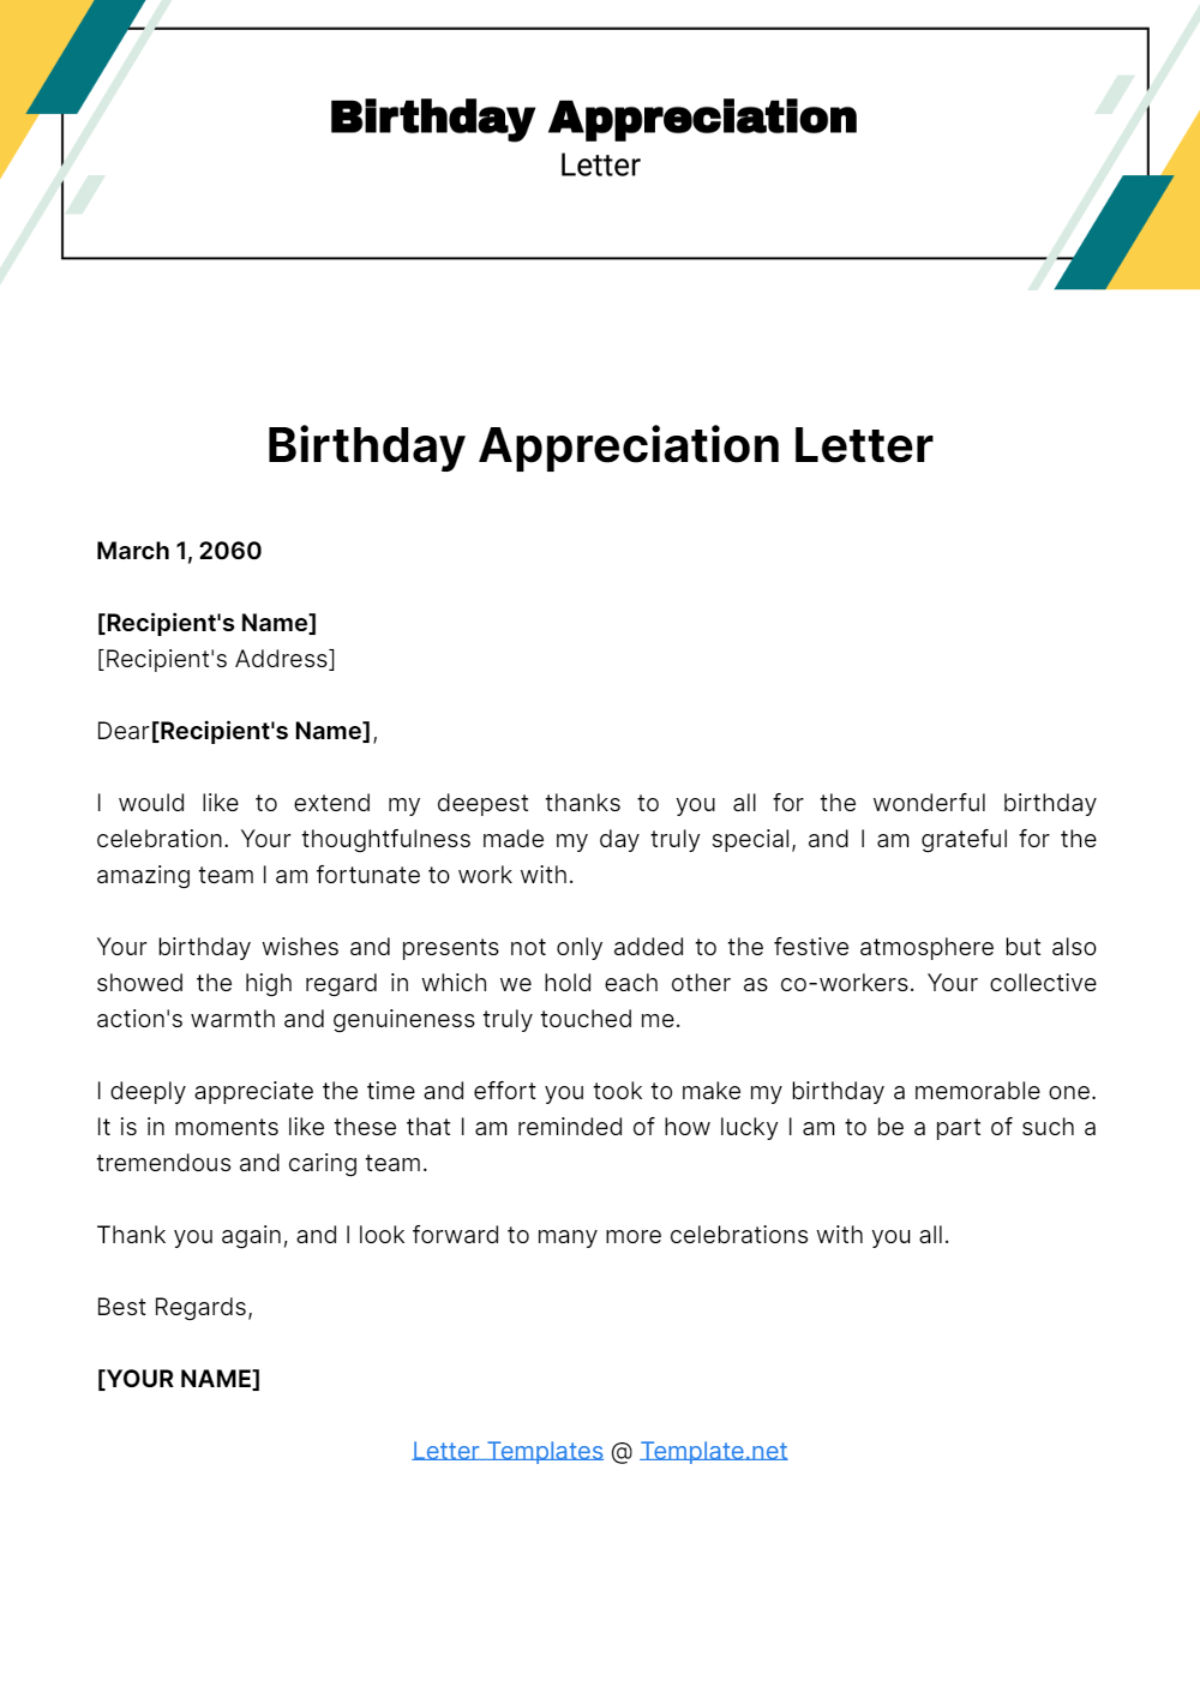 Birthday Appreciation Letter Template